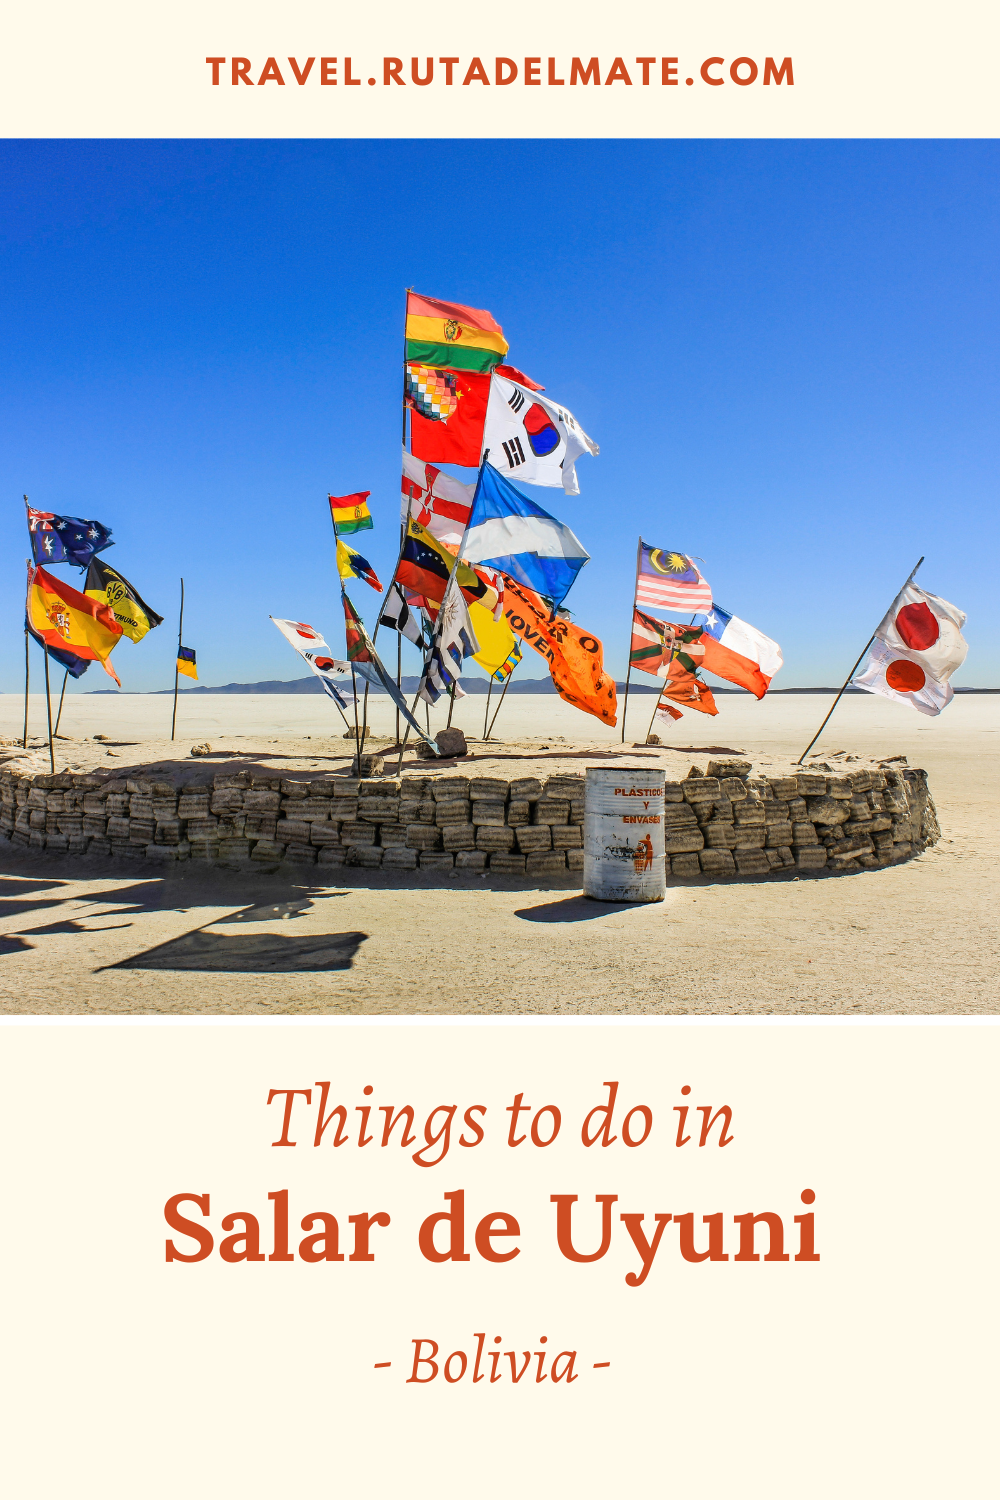 PIN - Things to do in the Salar de Uyuni and surrounding areas